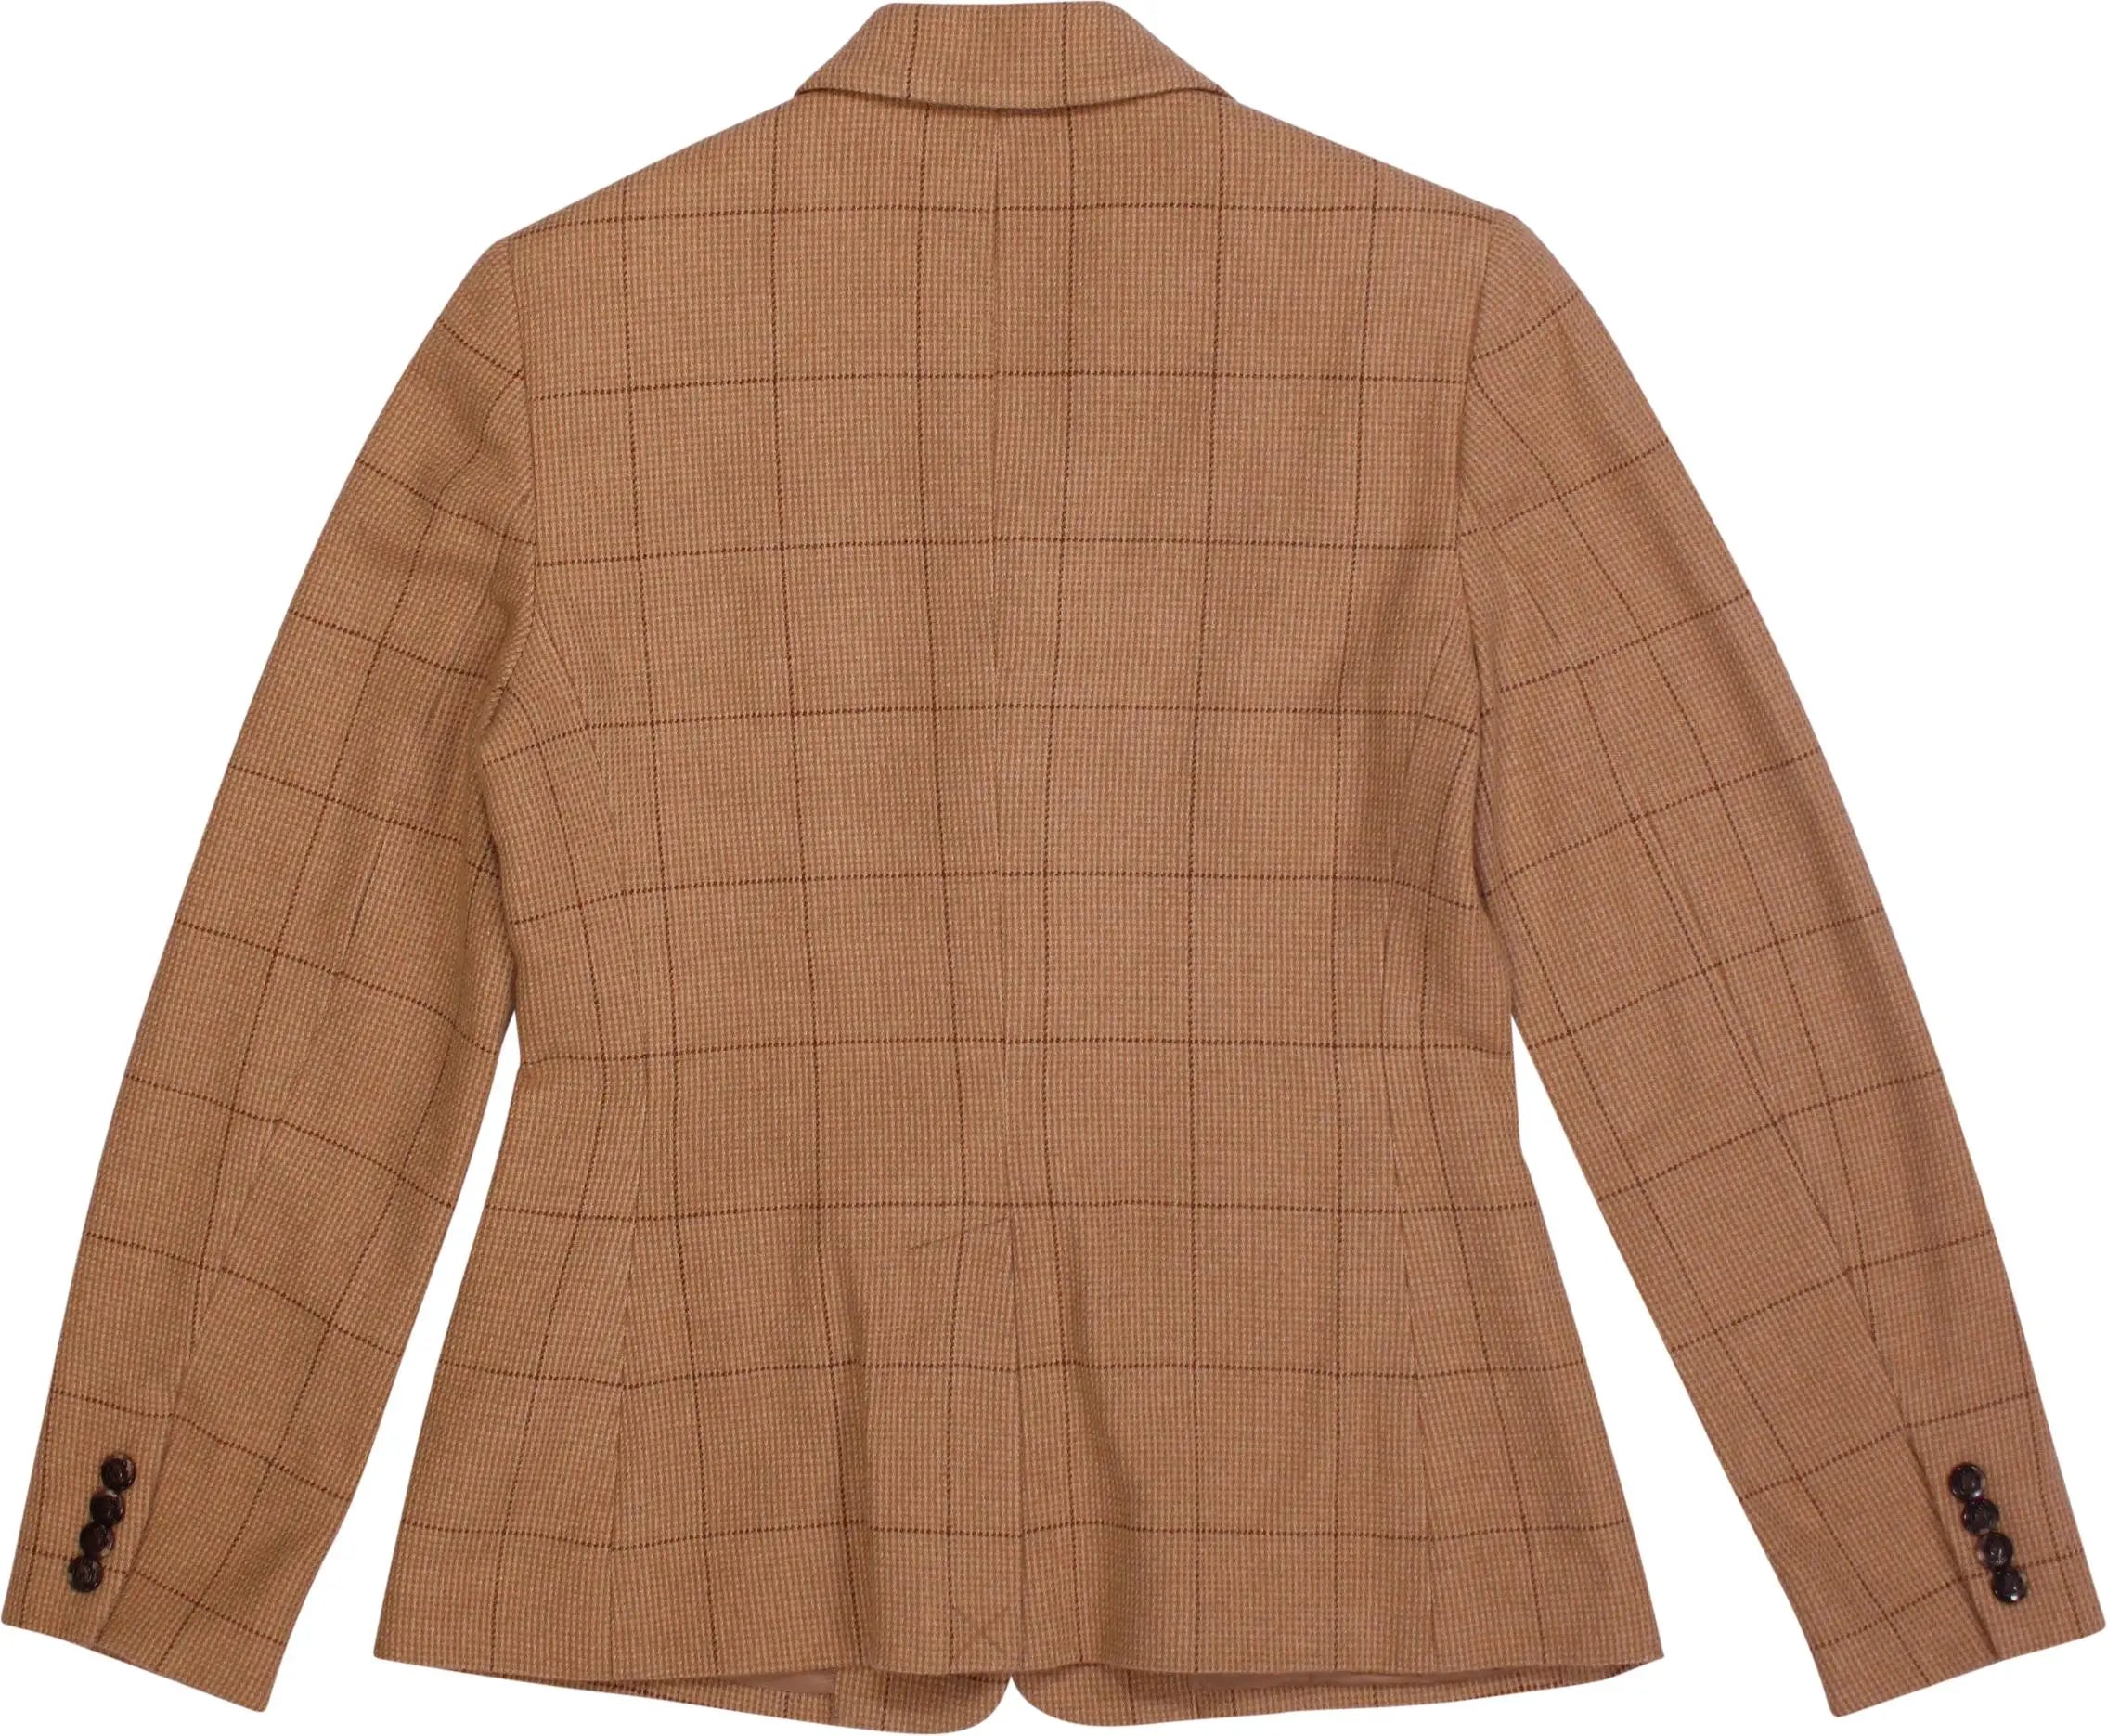 Ralph Lauren - Brown Wool Blazer by Ralph Lauren- ThriftTale.com - Vintage and second handclothing